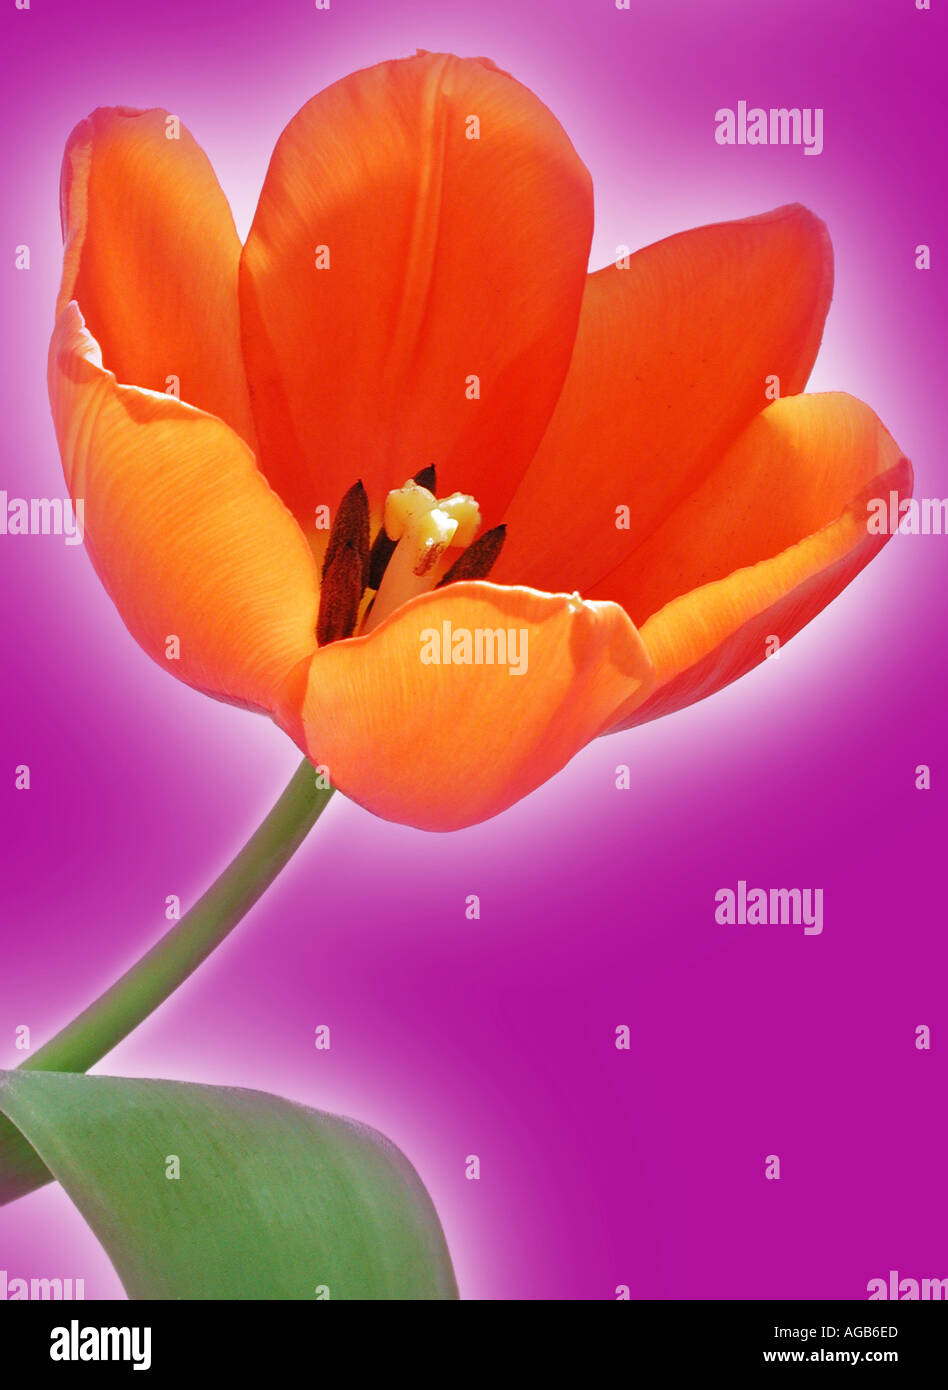 Singular tulip with a modern twist Stock Photo